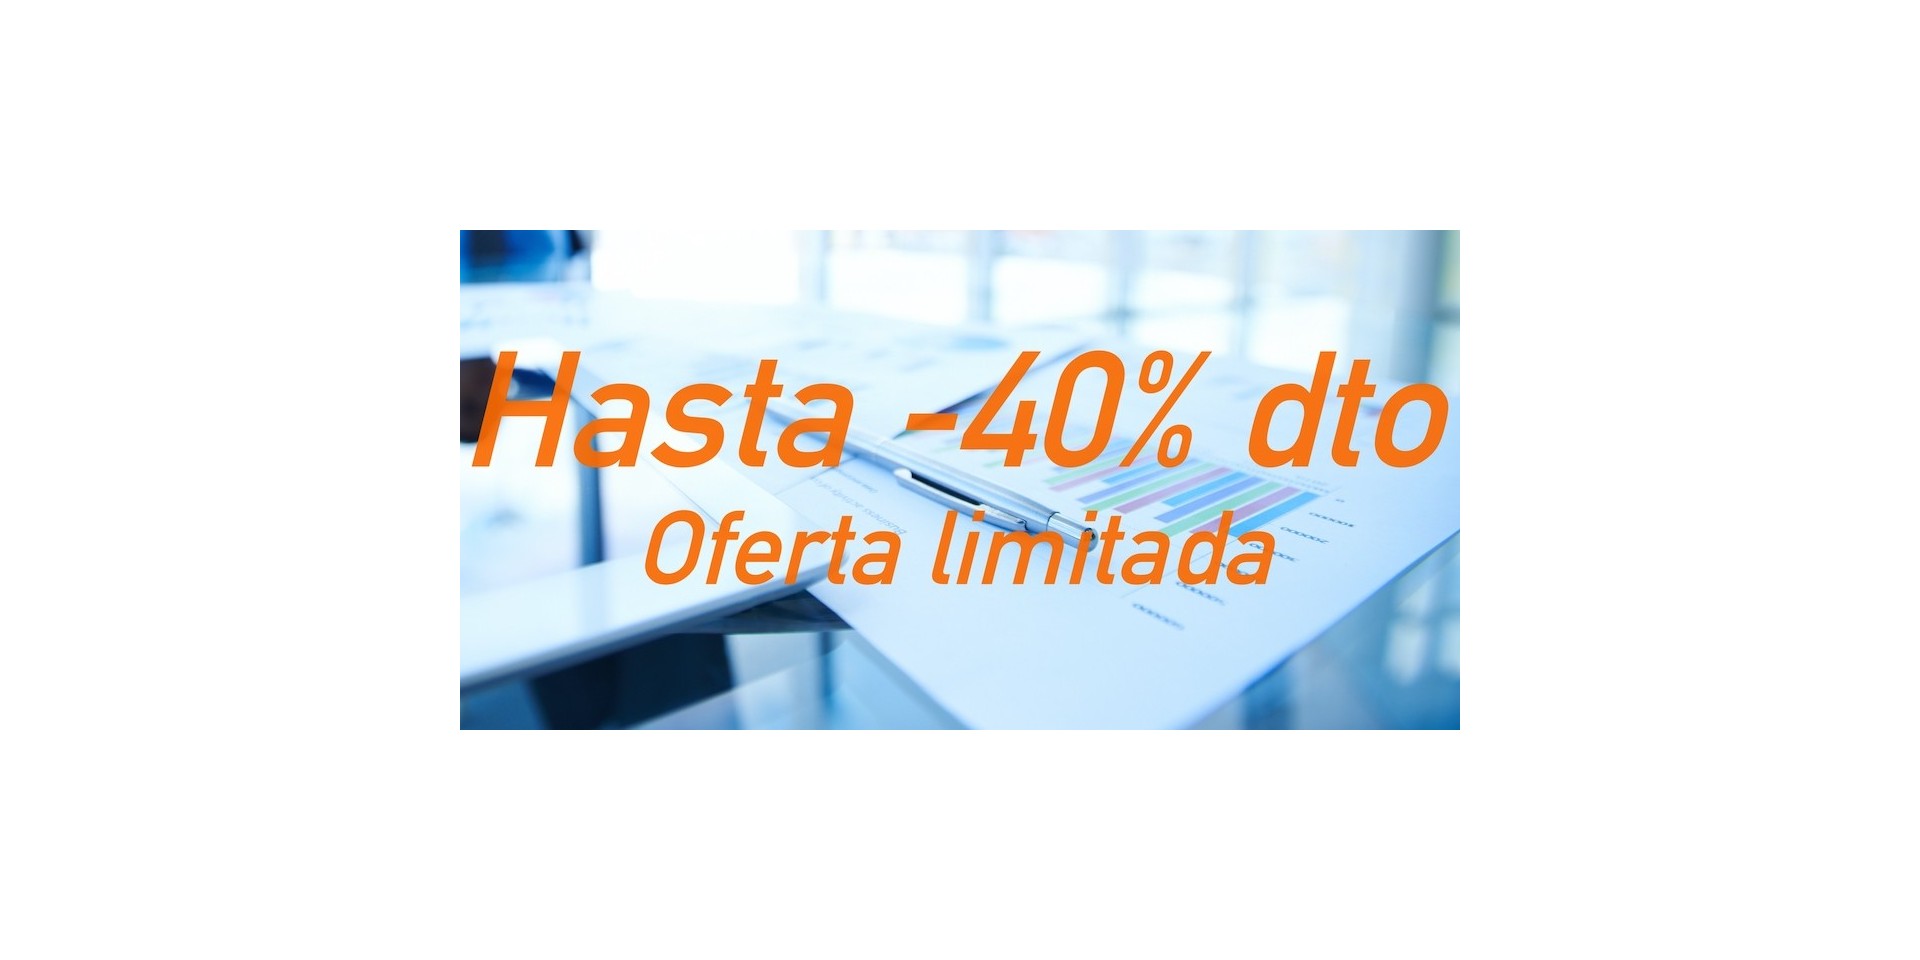 OFERTA LIMITADA - HASTA 40% DTO